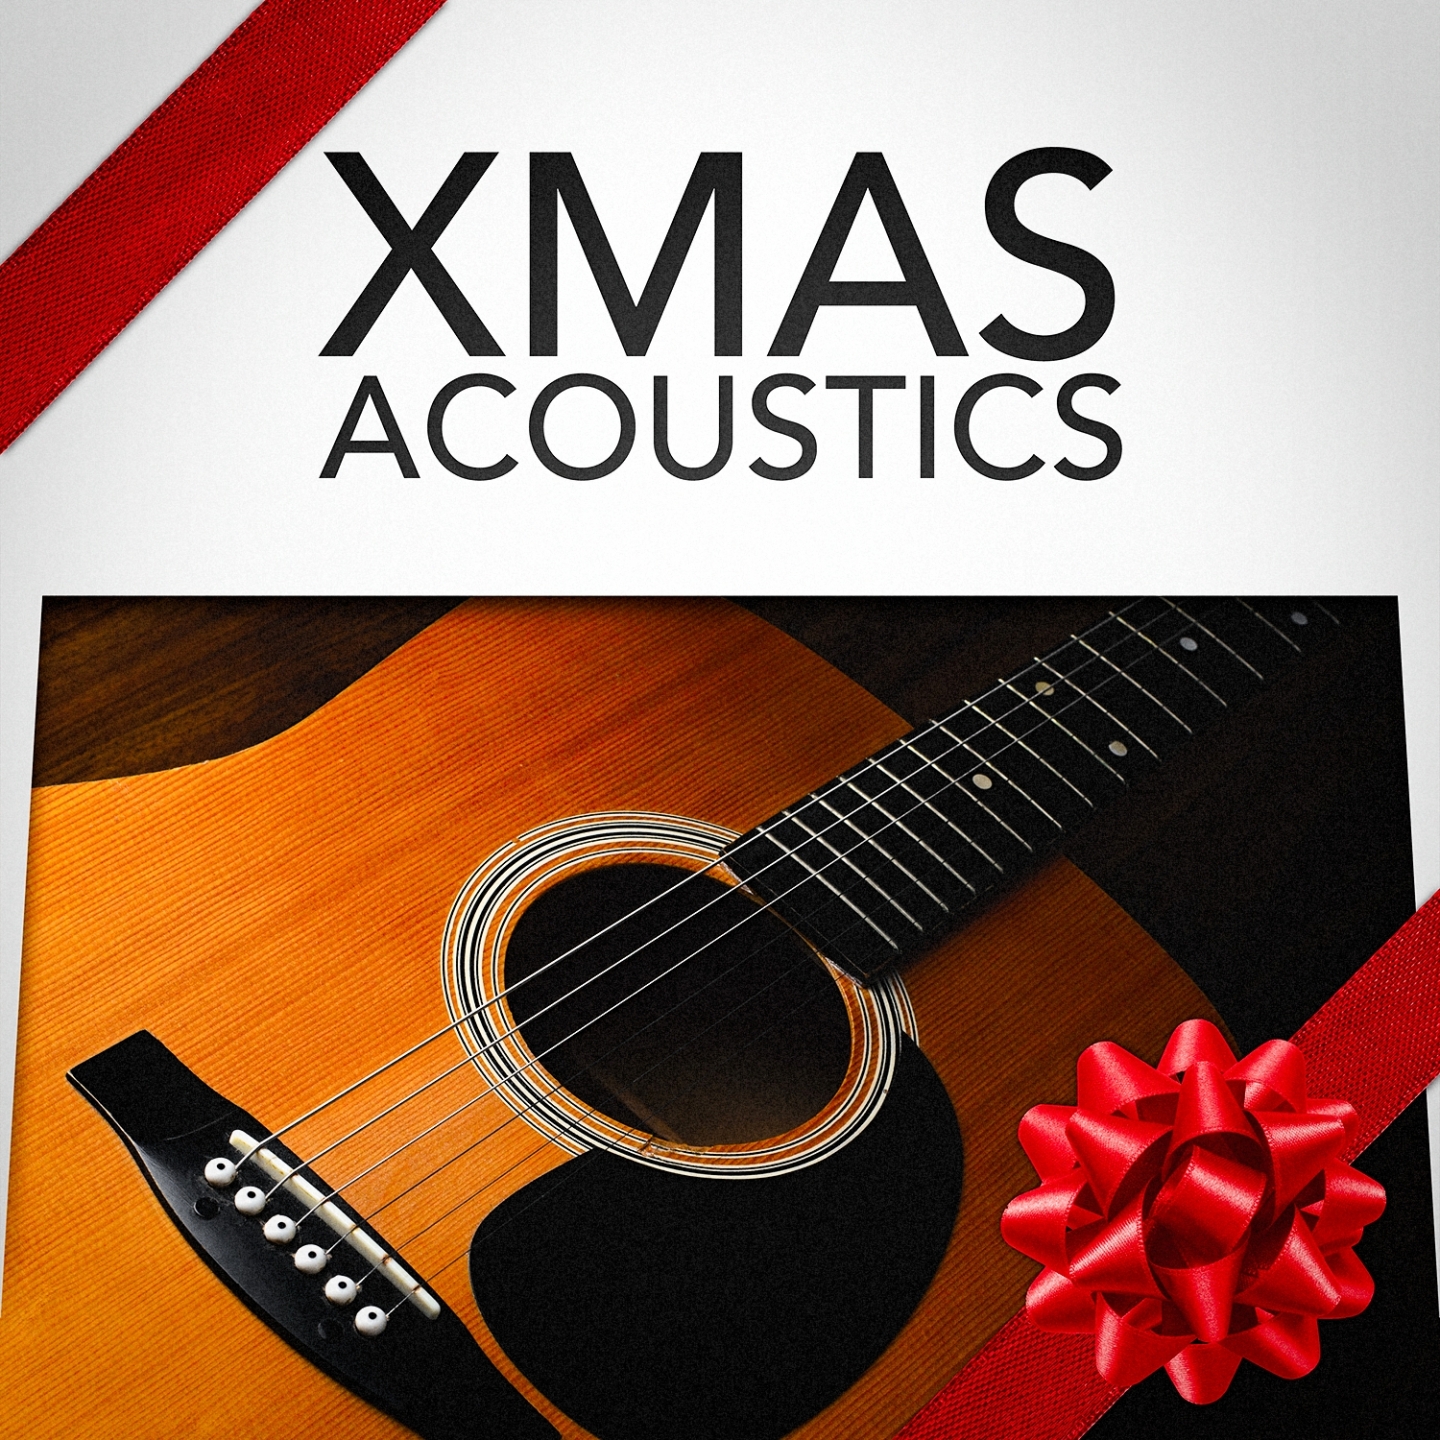 Xmas Acoustics